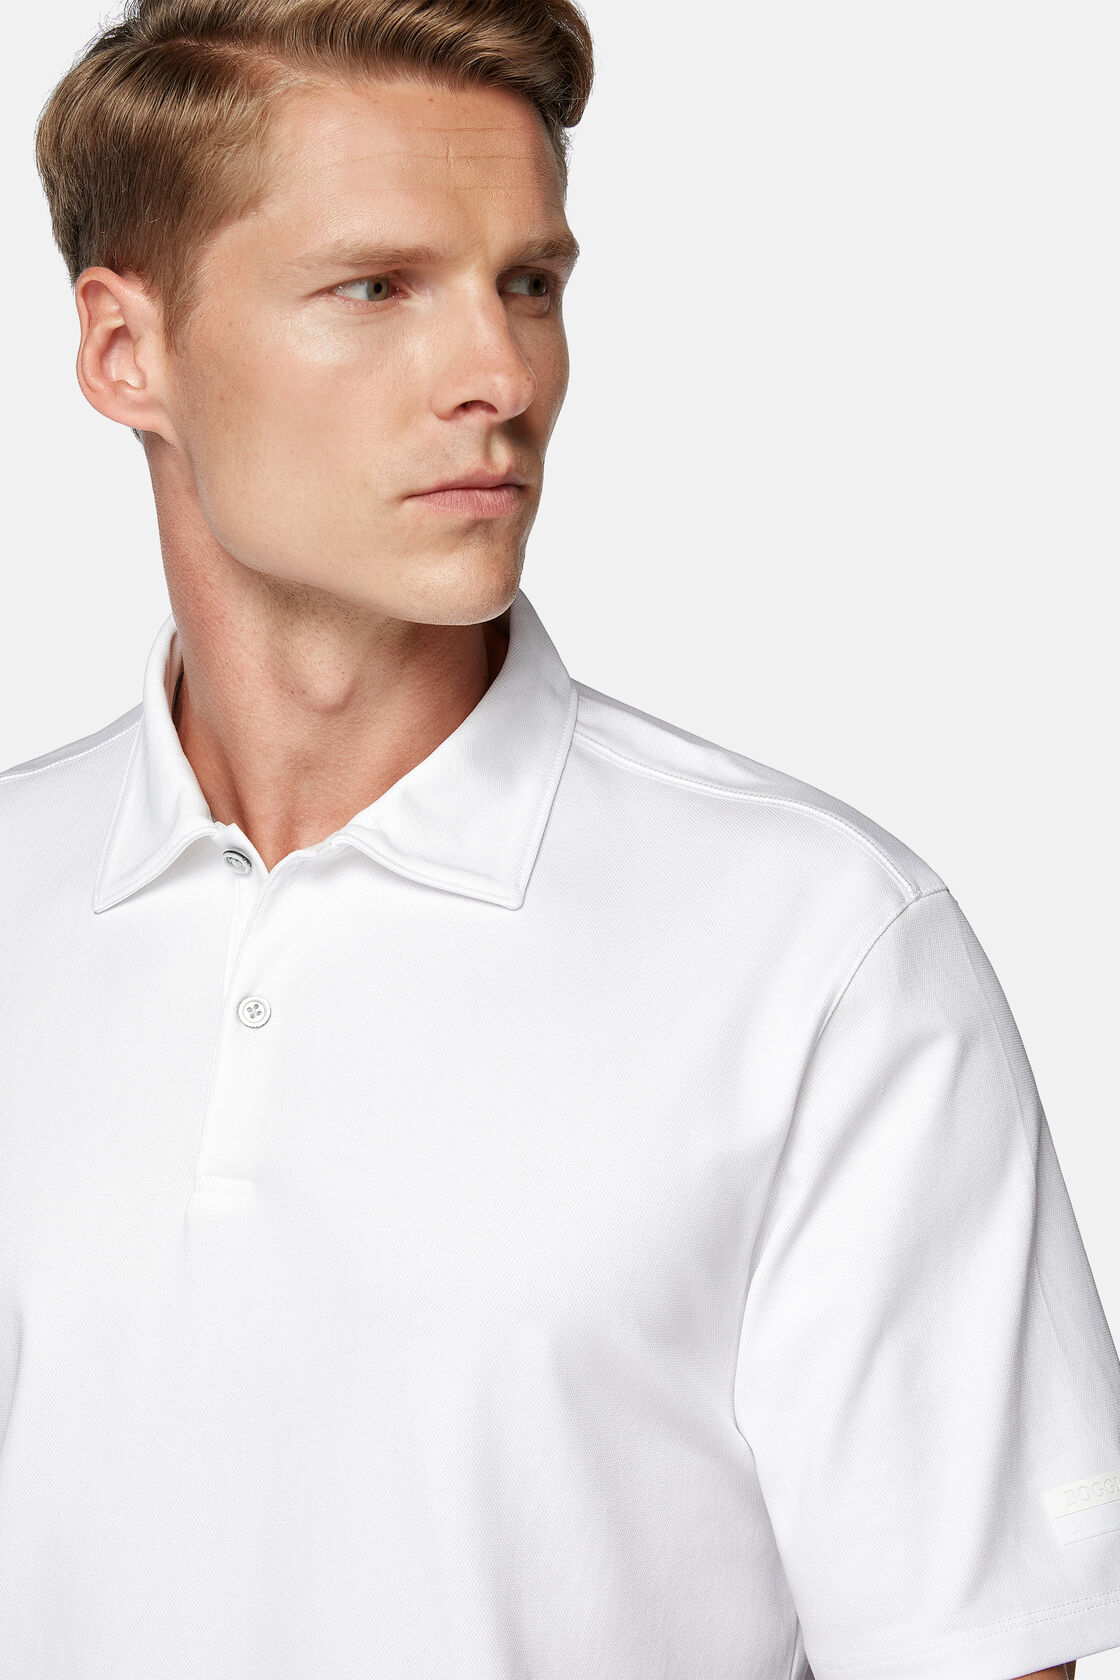 Poloshirt van high-performance piqué, White, hi-res